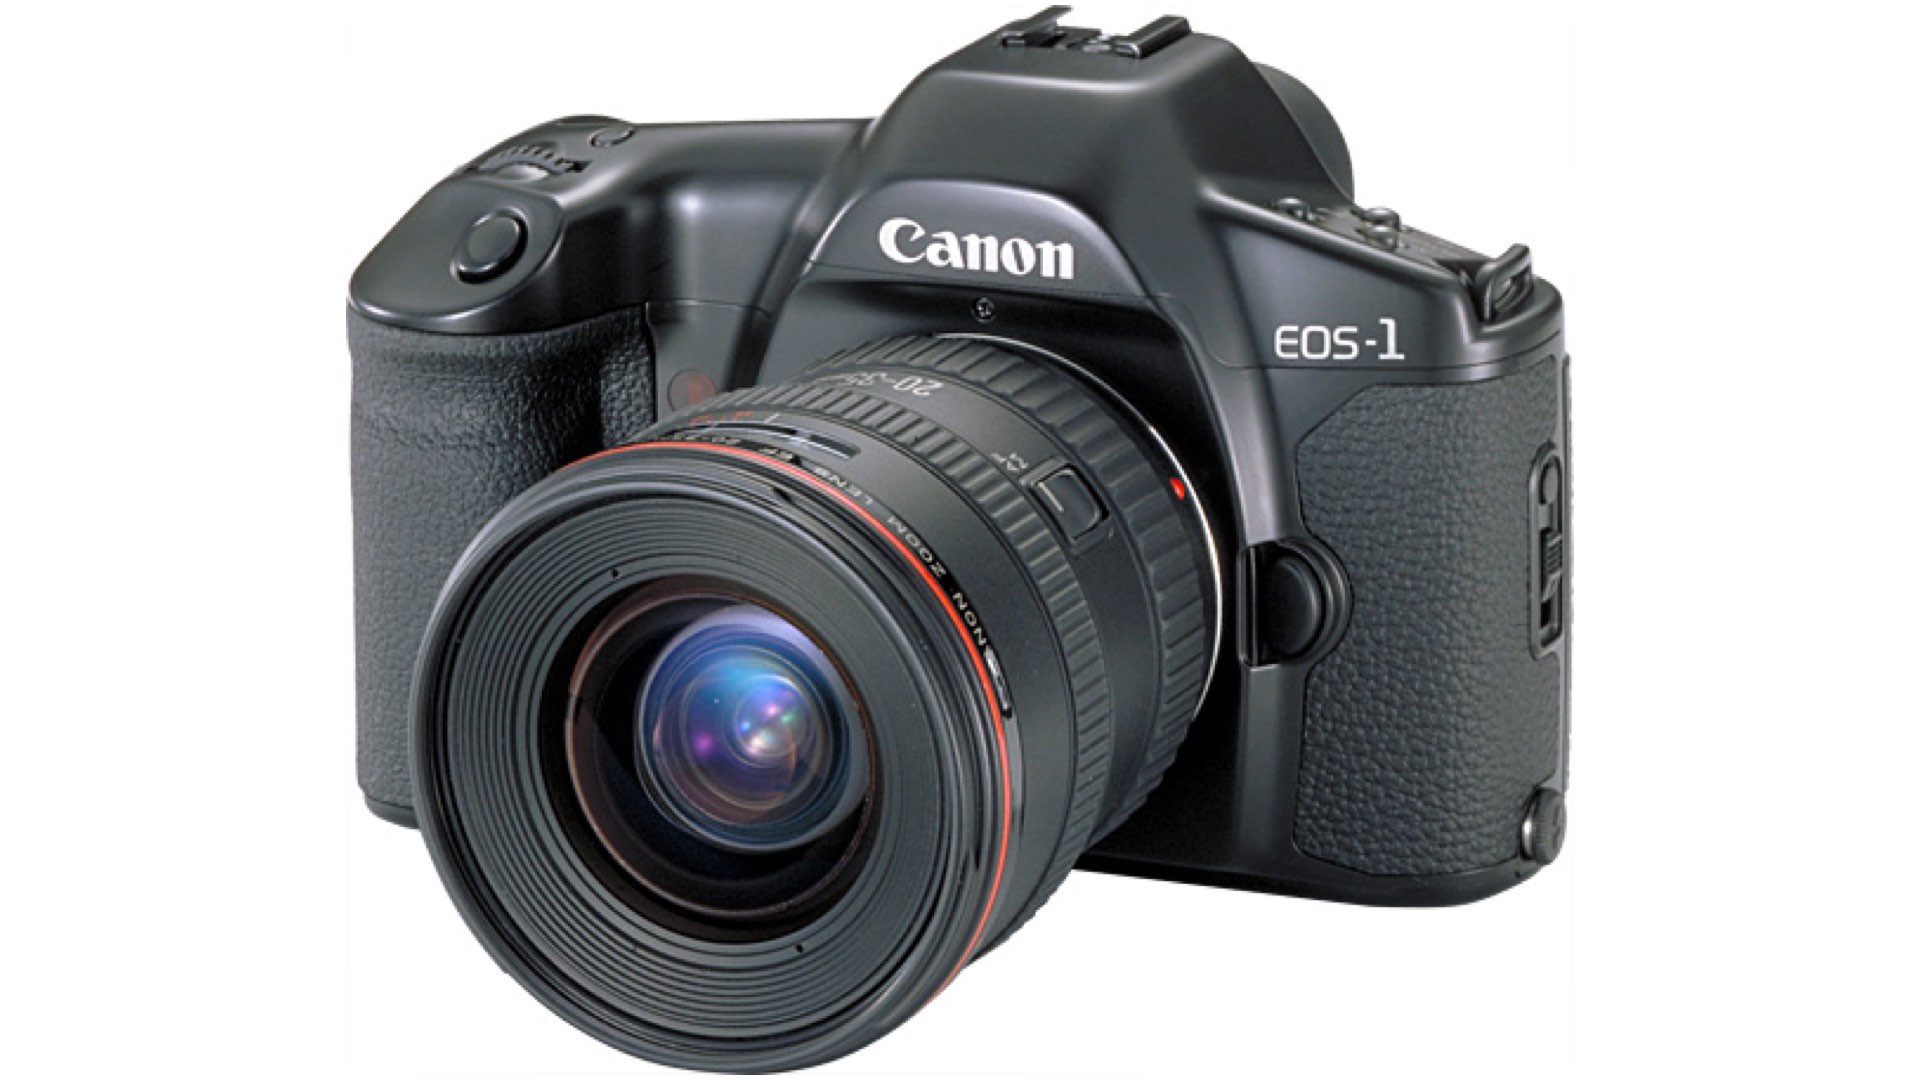 Premier EOS professionnel de Canon : l'EOS-1